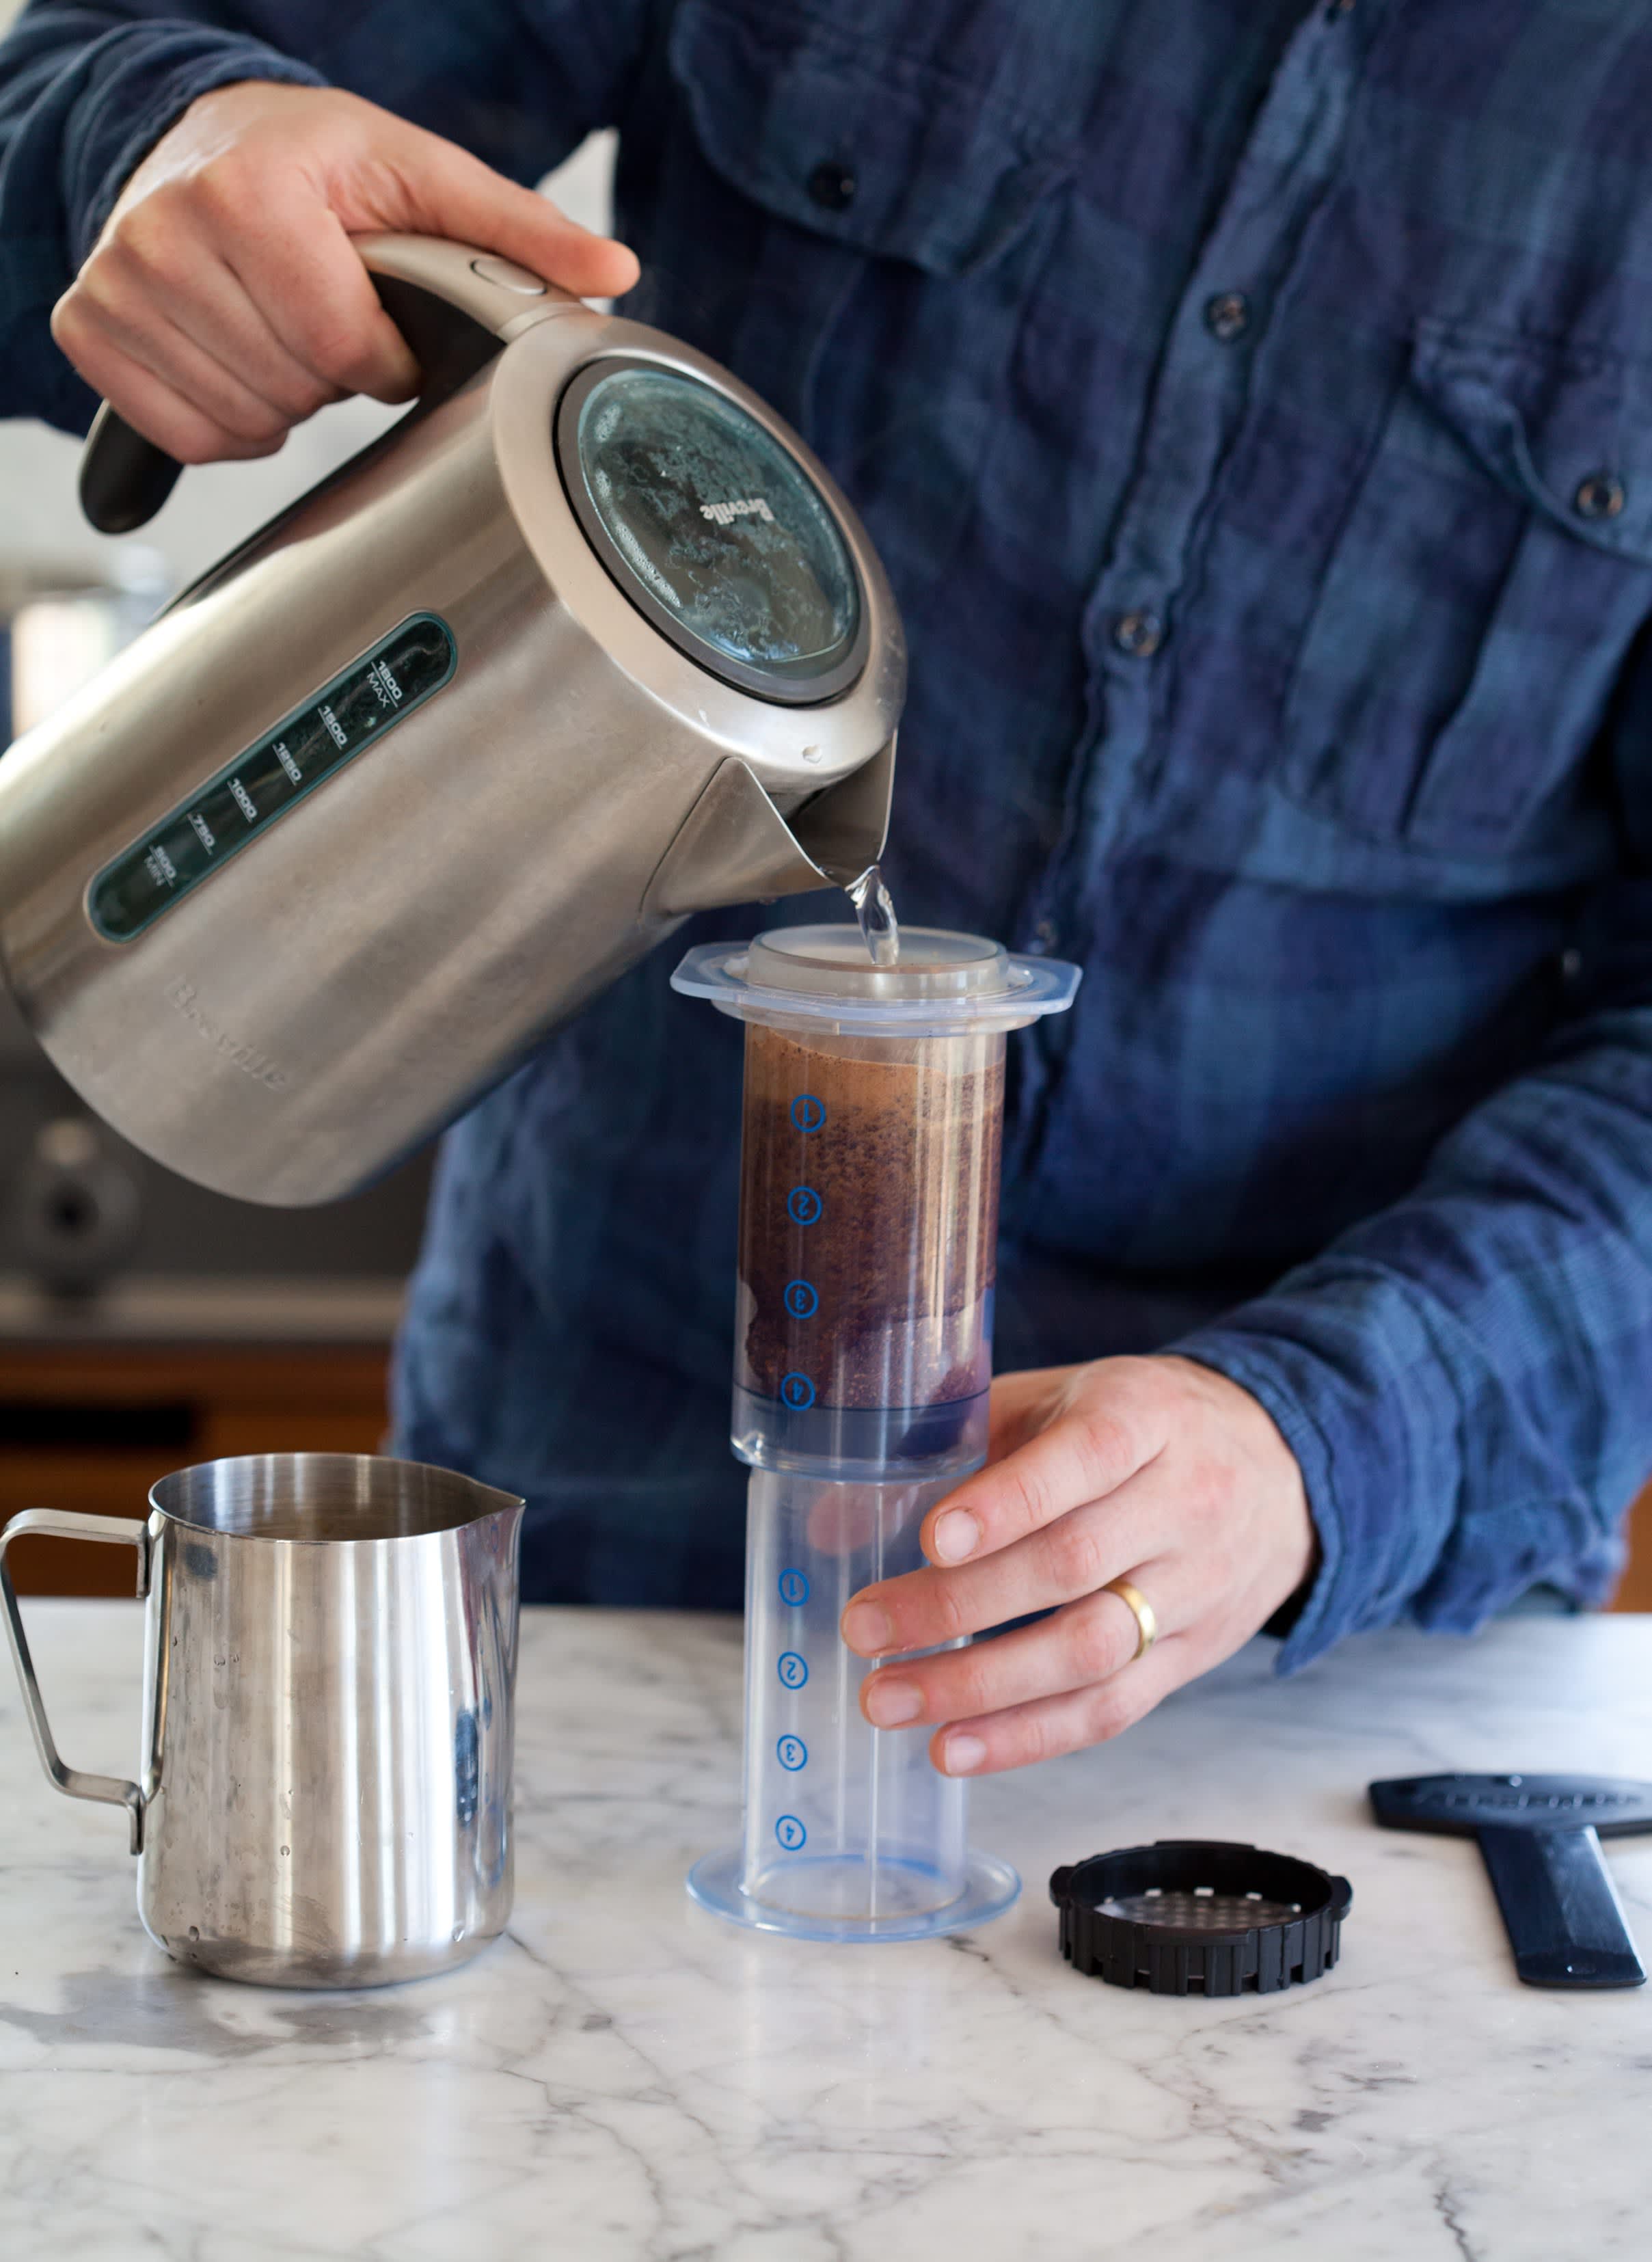 AeroPress Coffee Recipe (Two Ways)